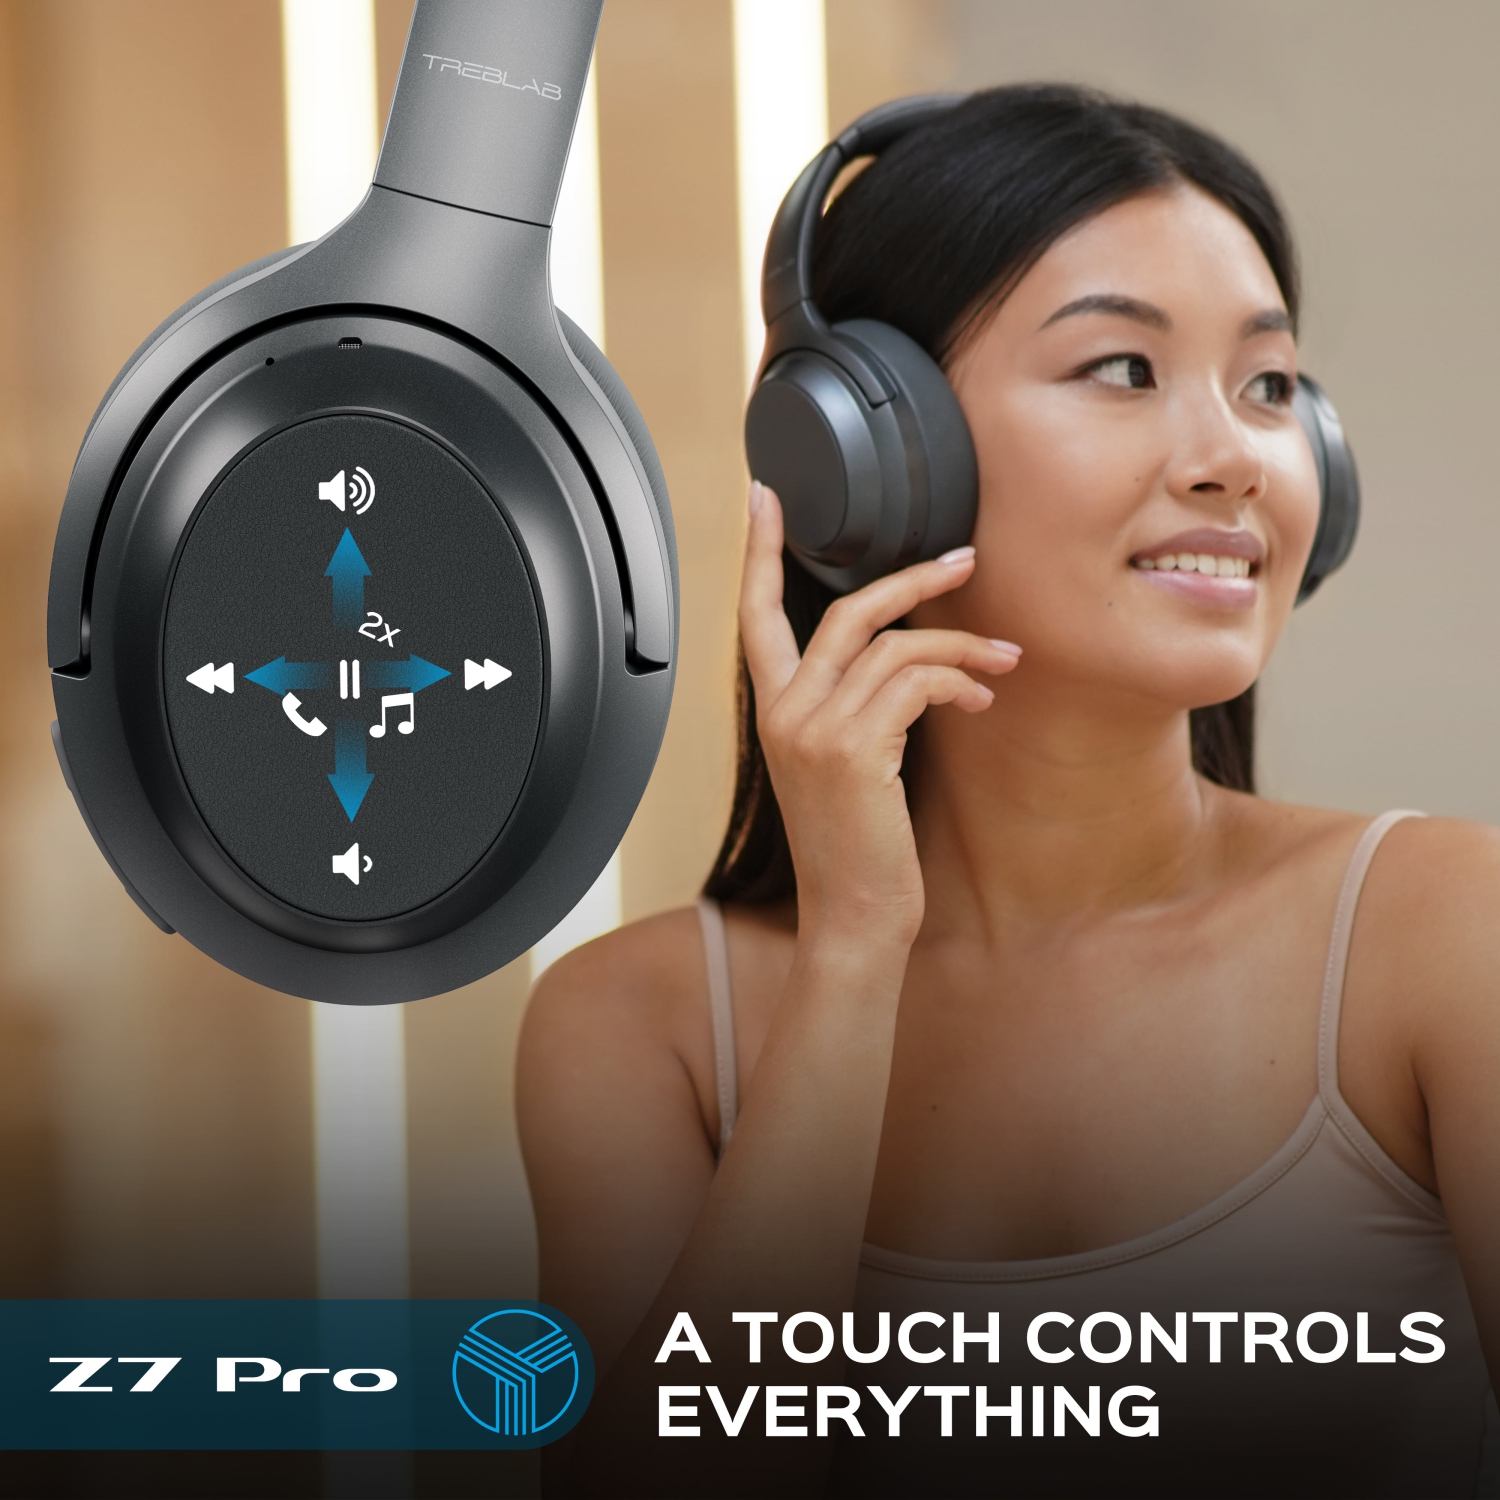 TREBLAB Z7 PRO Hybrid Active Noise Canceling Headphones with Mic